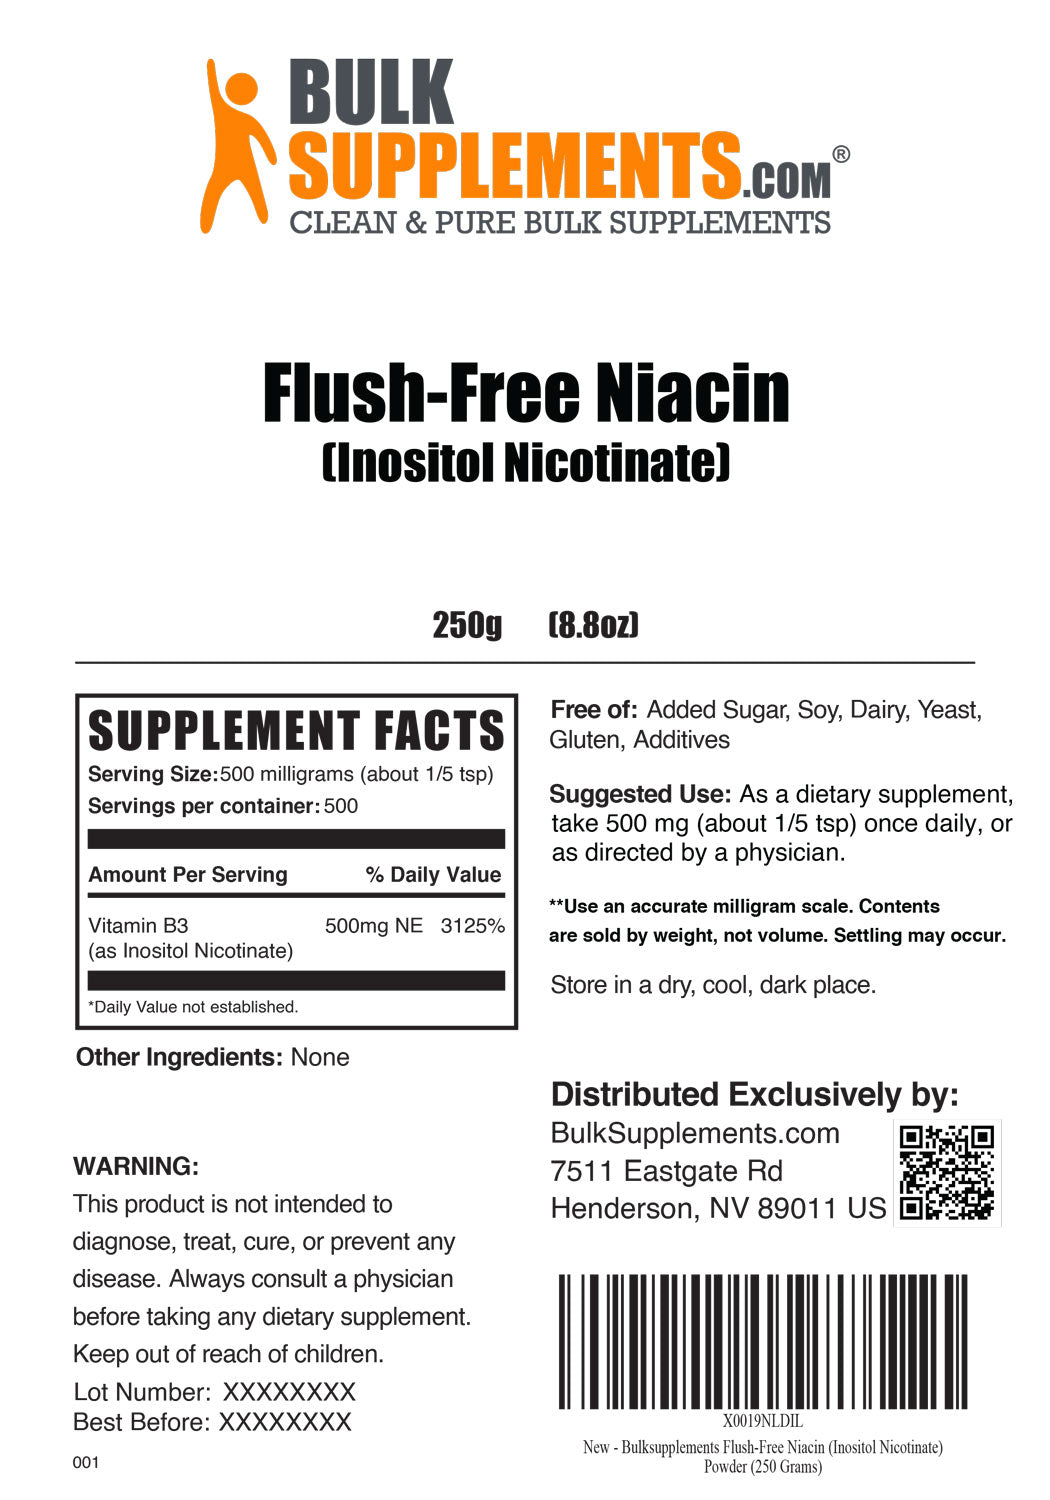 Flush-free Niacin powder label 250g